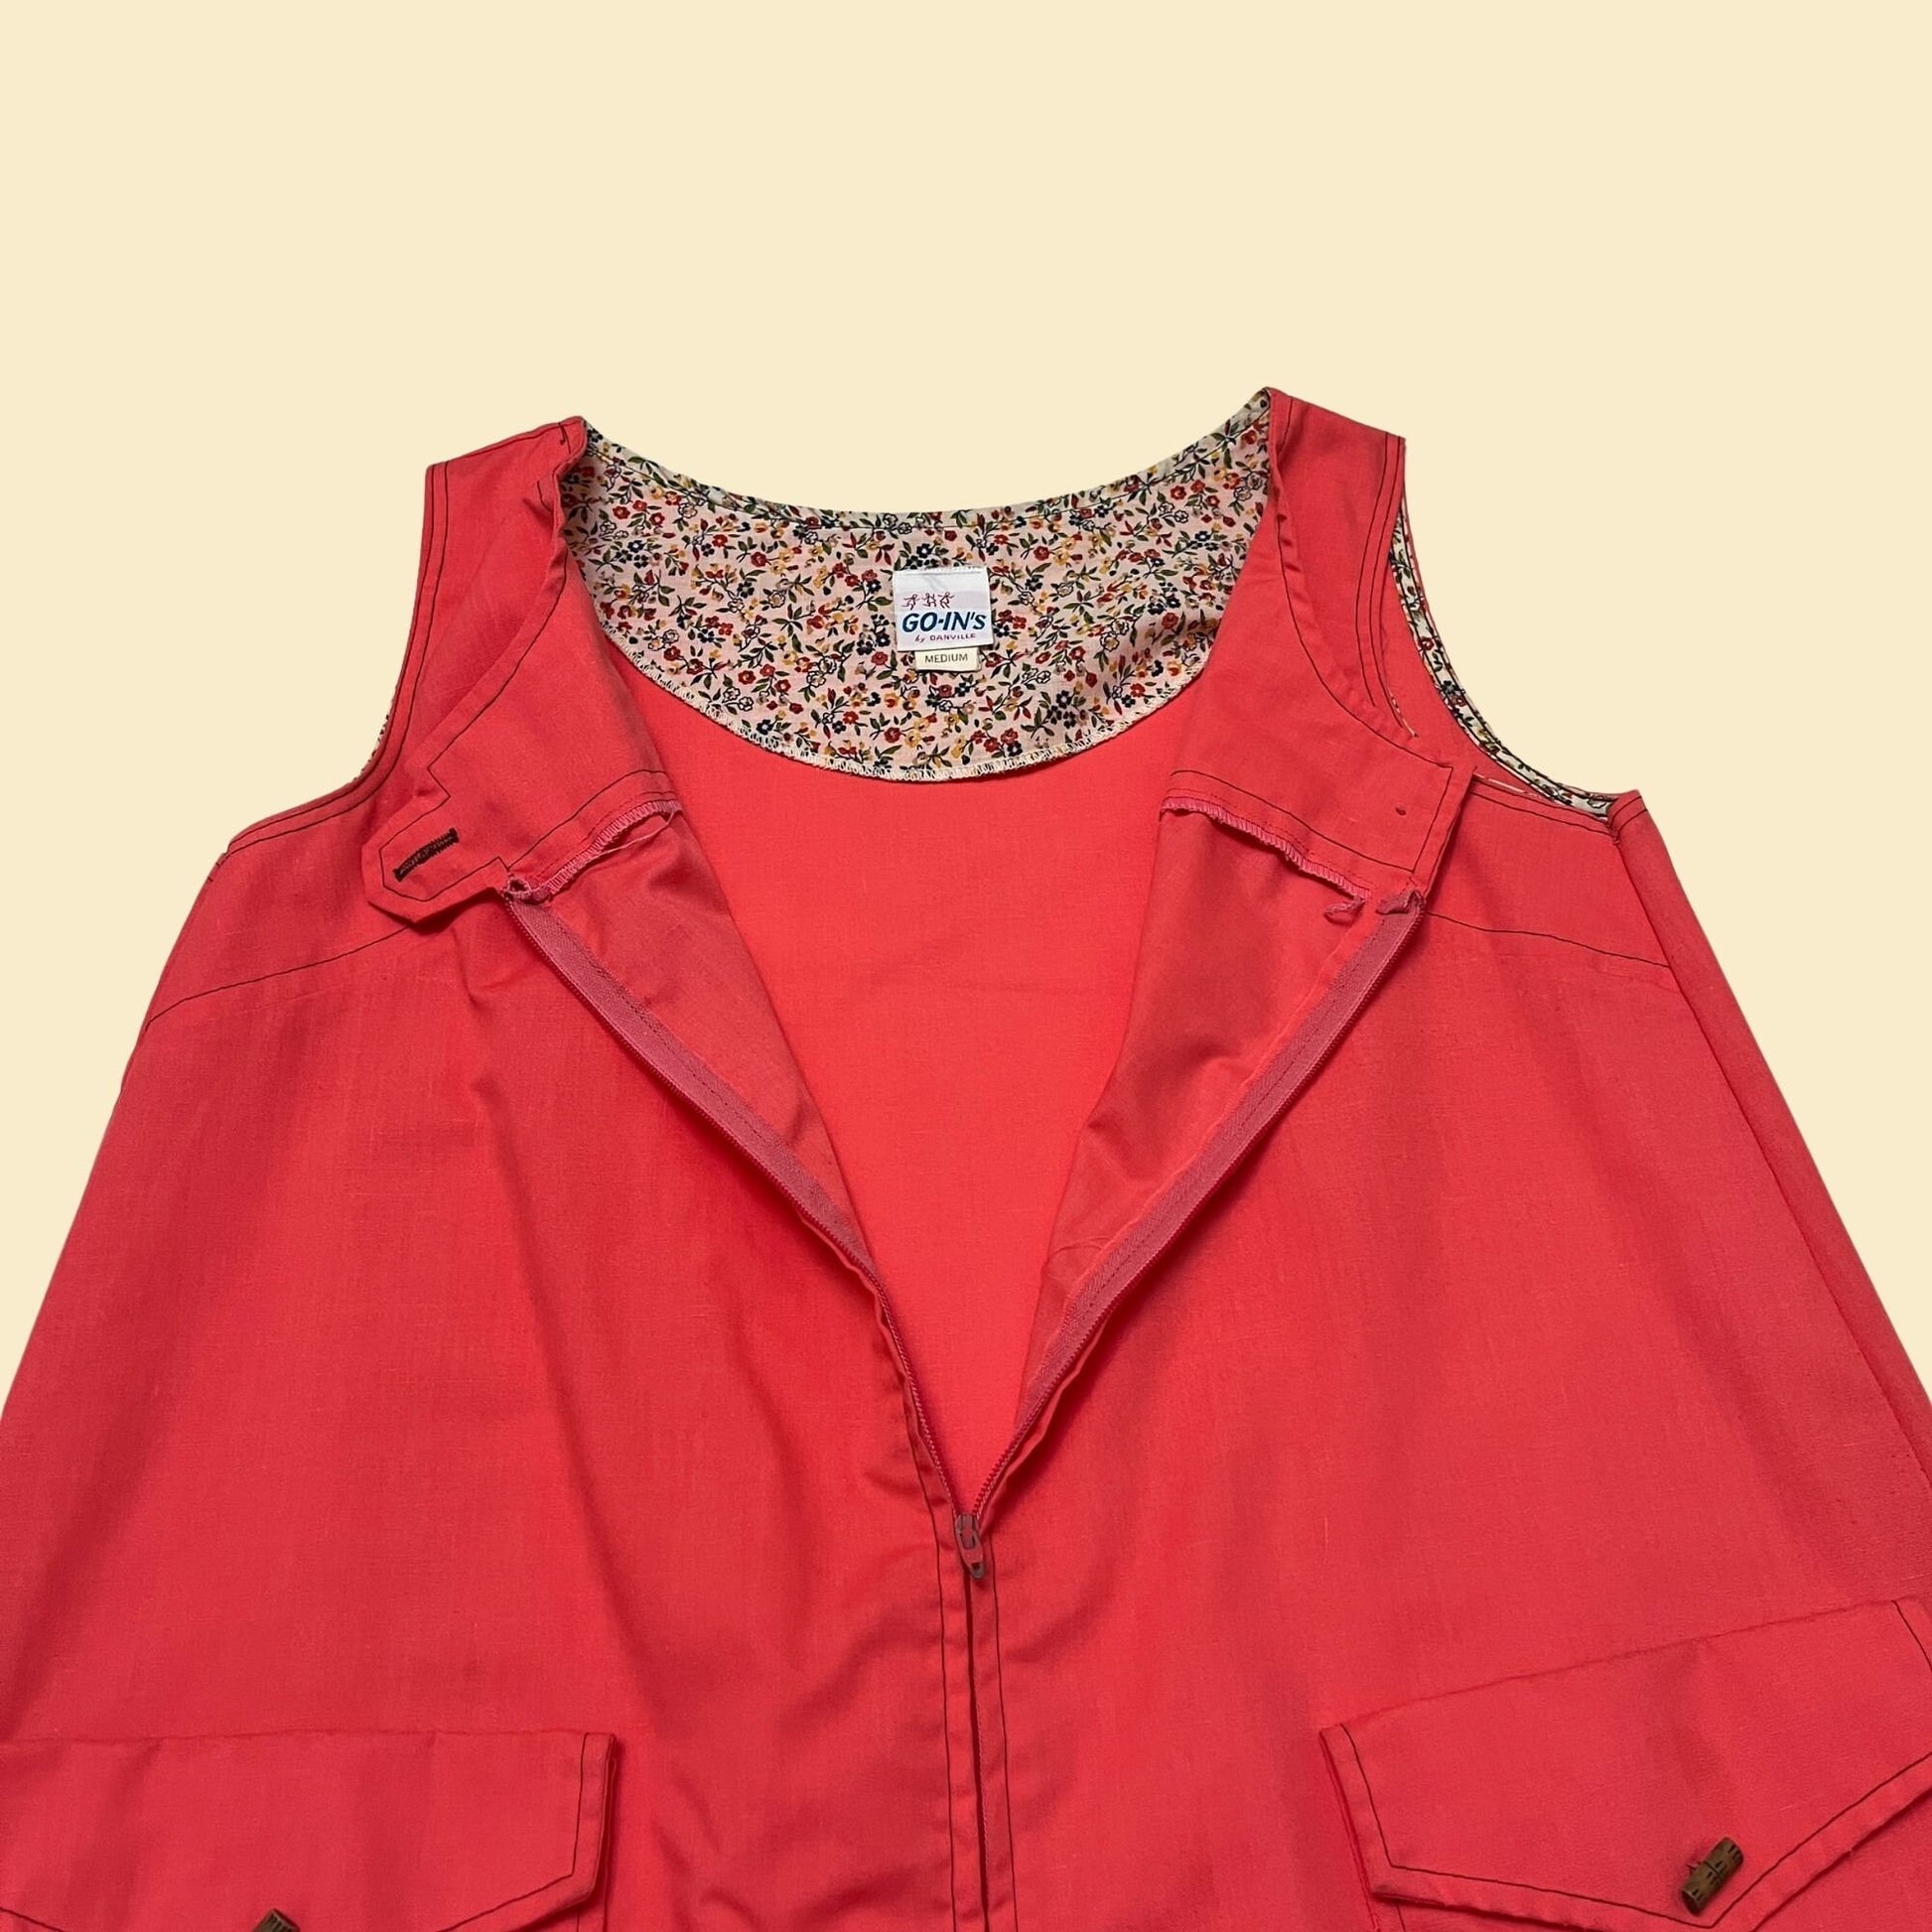 70s pink dress with front zipper and pockets, size medium 1970s women's shift dress, vintage sleeveless midi / knee length dress